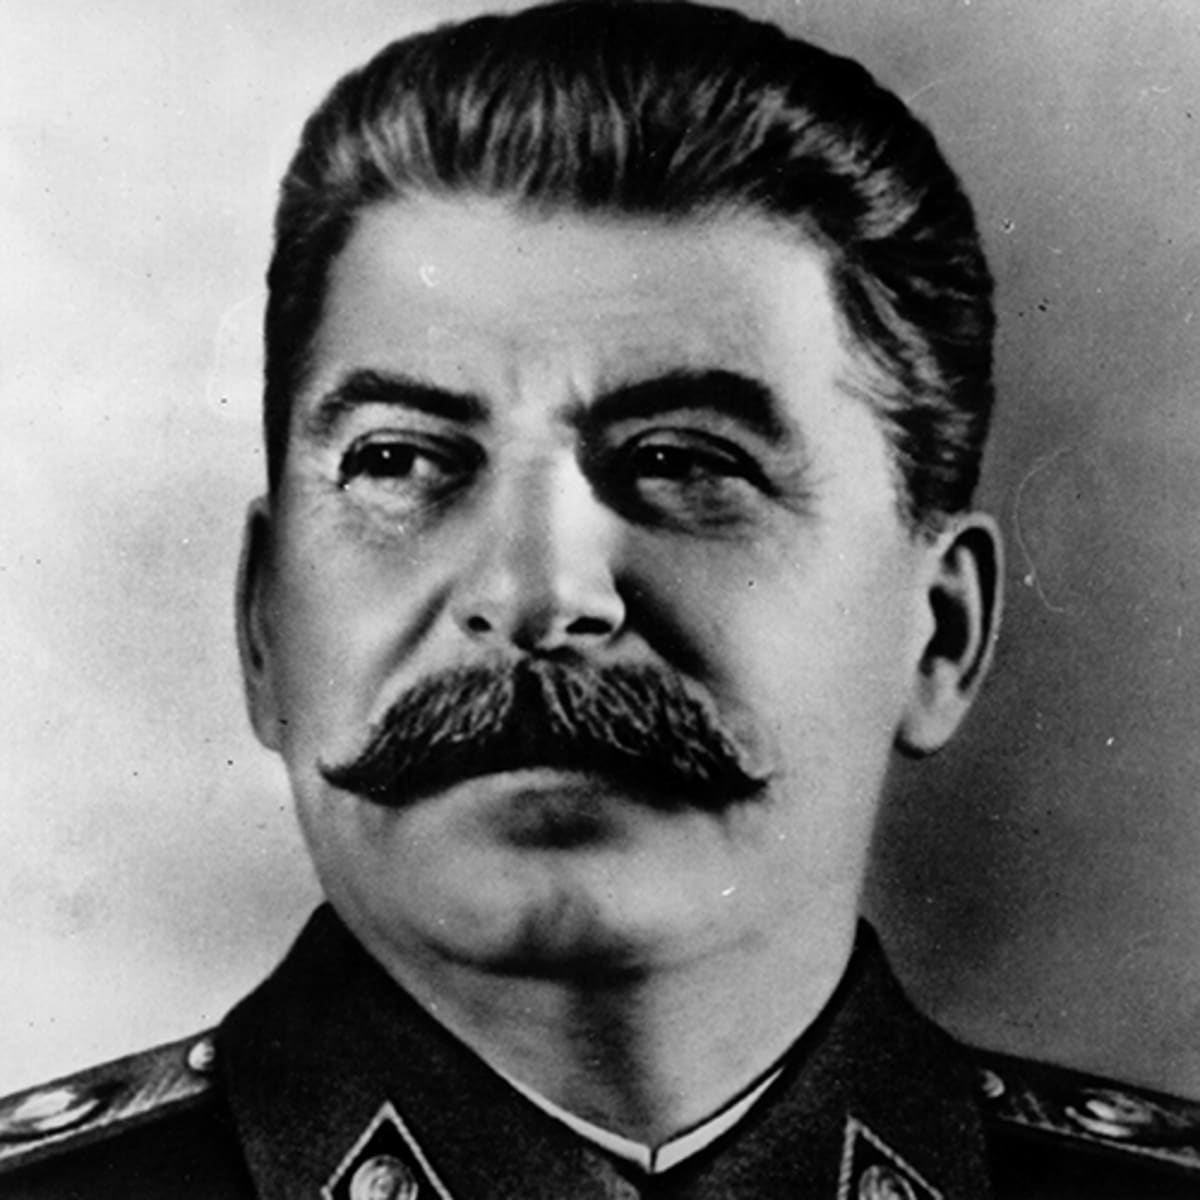 Episode 534: Marxism Part 2 – The Thought of Ioseb Besarionis dzе Jughashvili (Joseph Stalin)